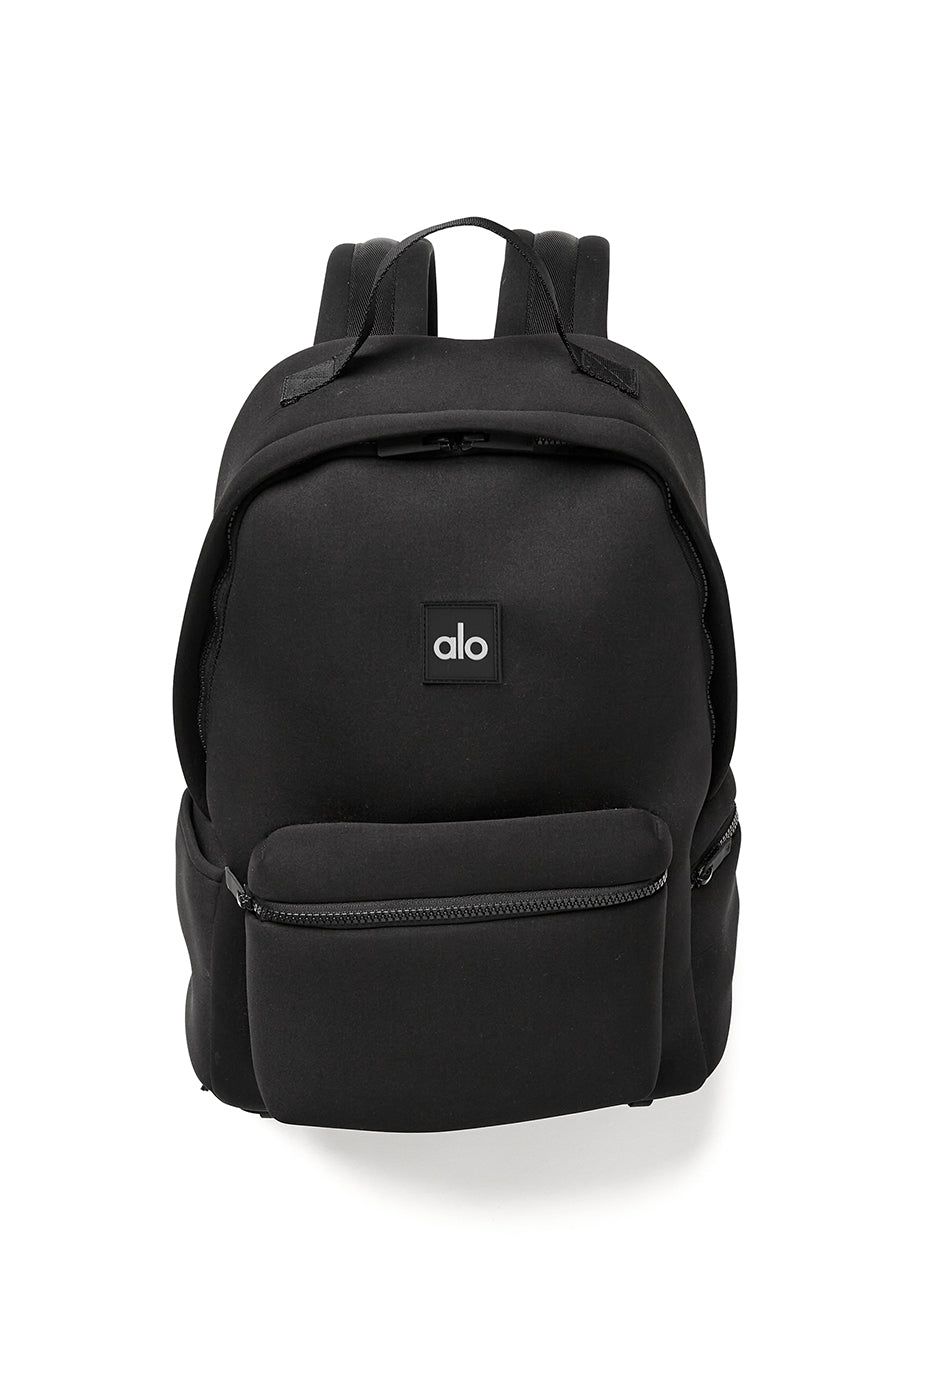 Pure Bliss Yoga Mat Carry Bag - Large & Waterproof Yoga/Pilates Bag With  Shoulder Strap & Pocket - Best Yoga Mat Carrier Travel Tote